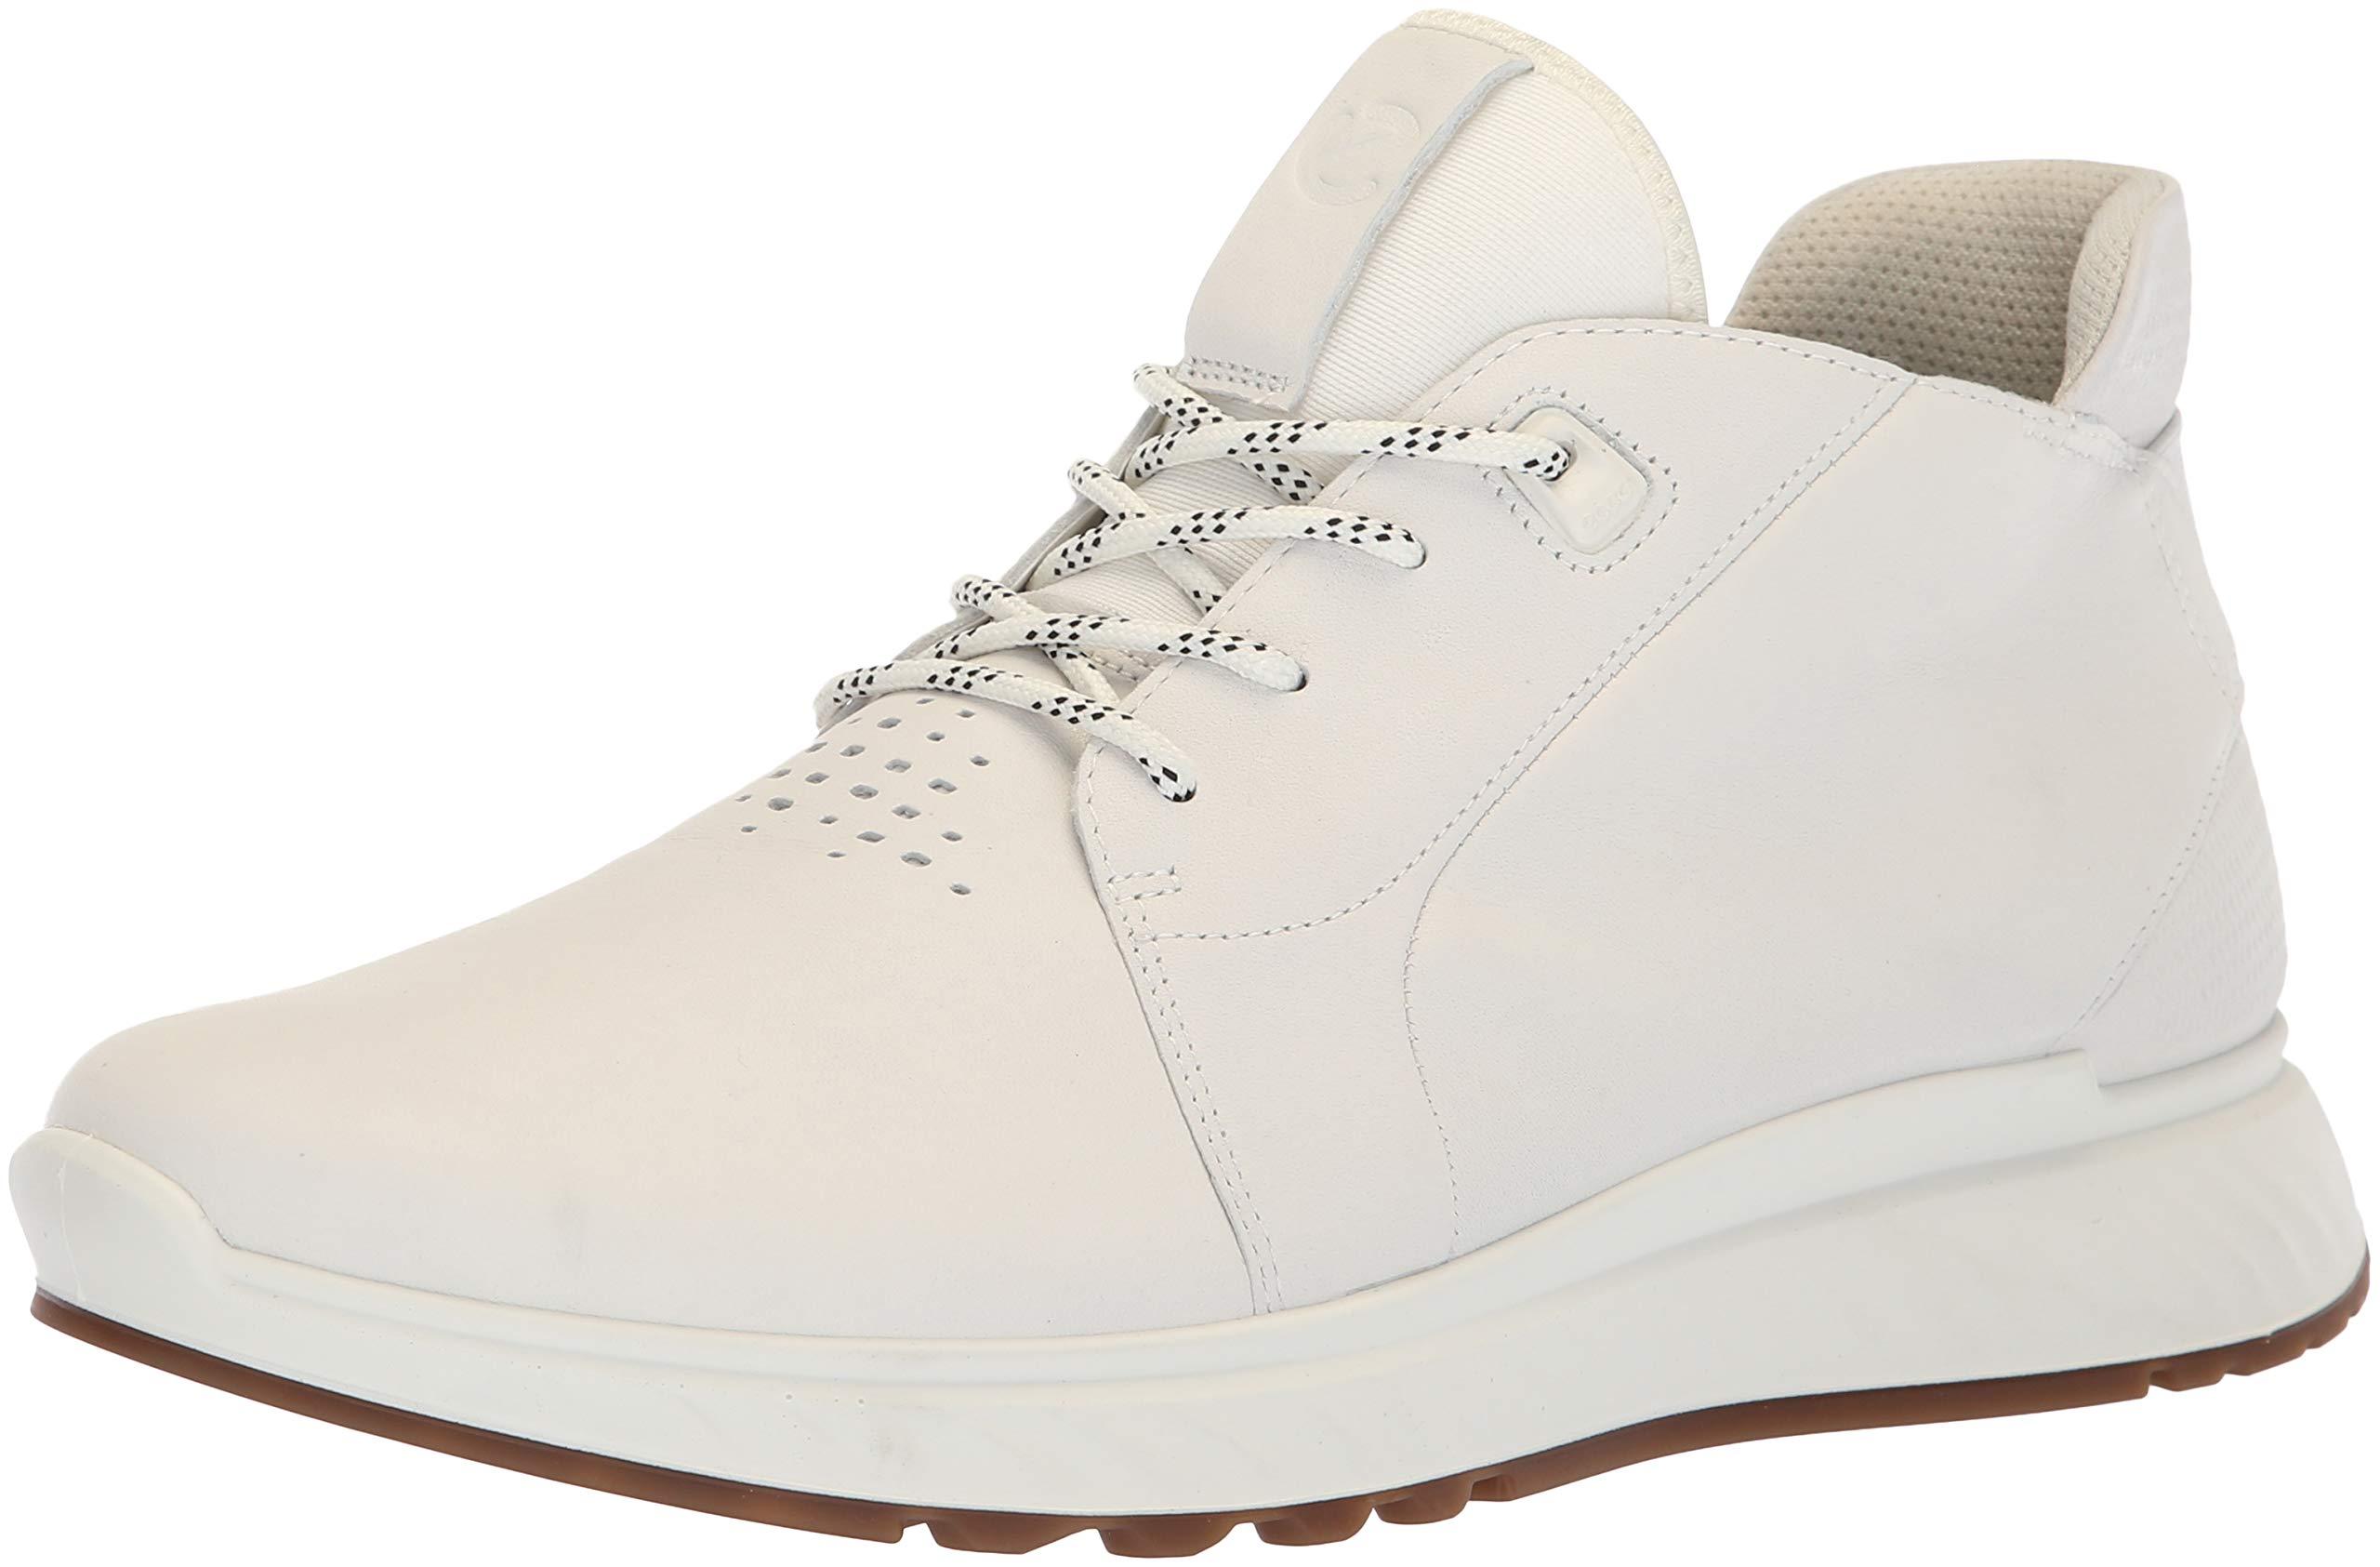 Teacher's day Disgust error Ecco Leather St1 High Sneaker in White Nubuck (White) for Men - Save 60% -  Lyst